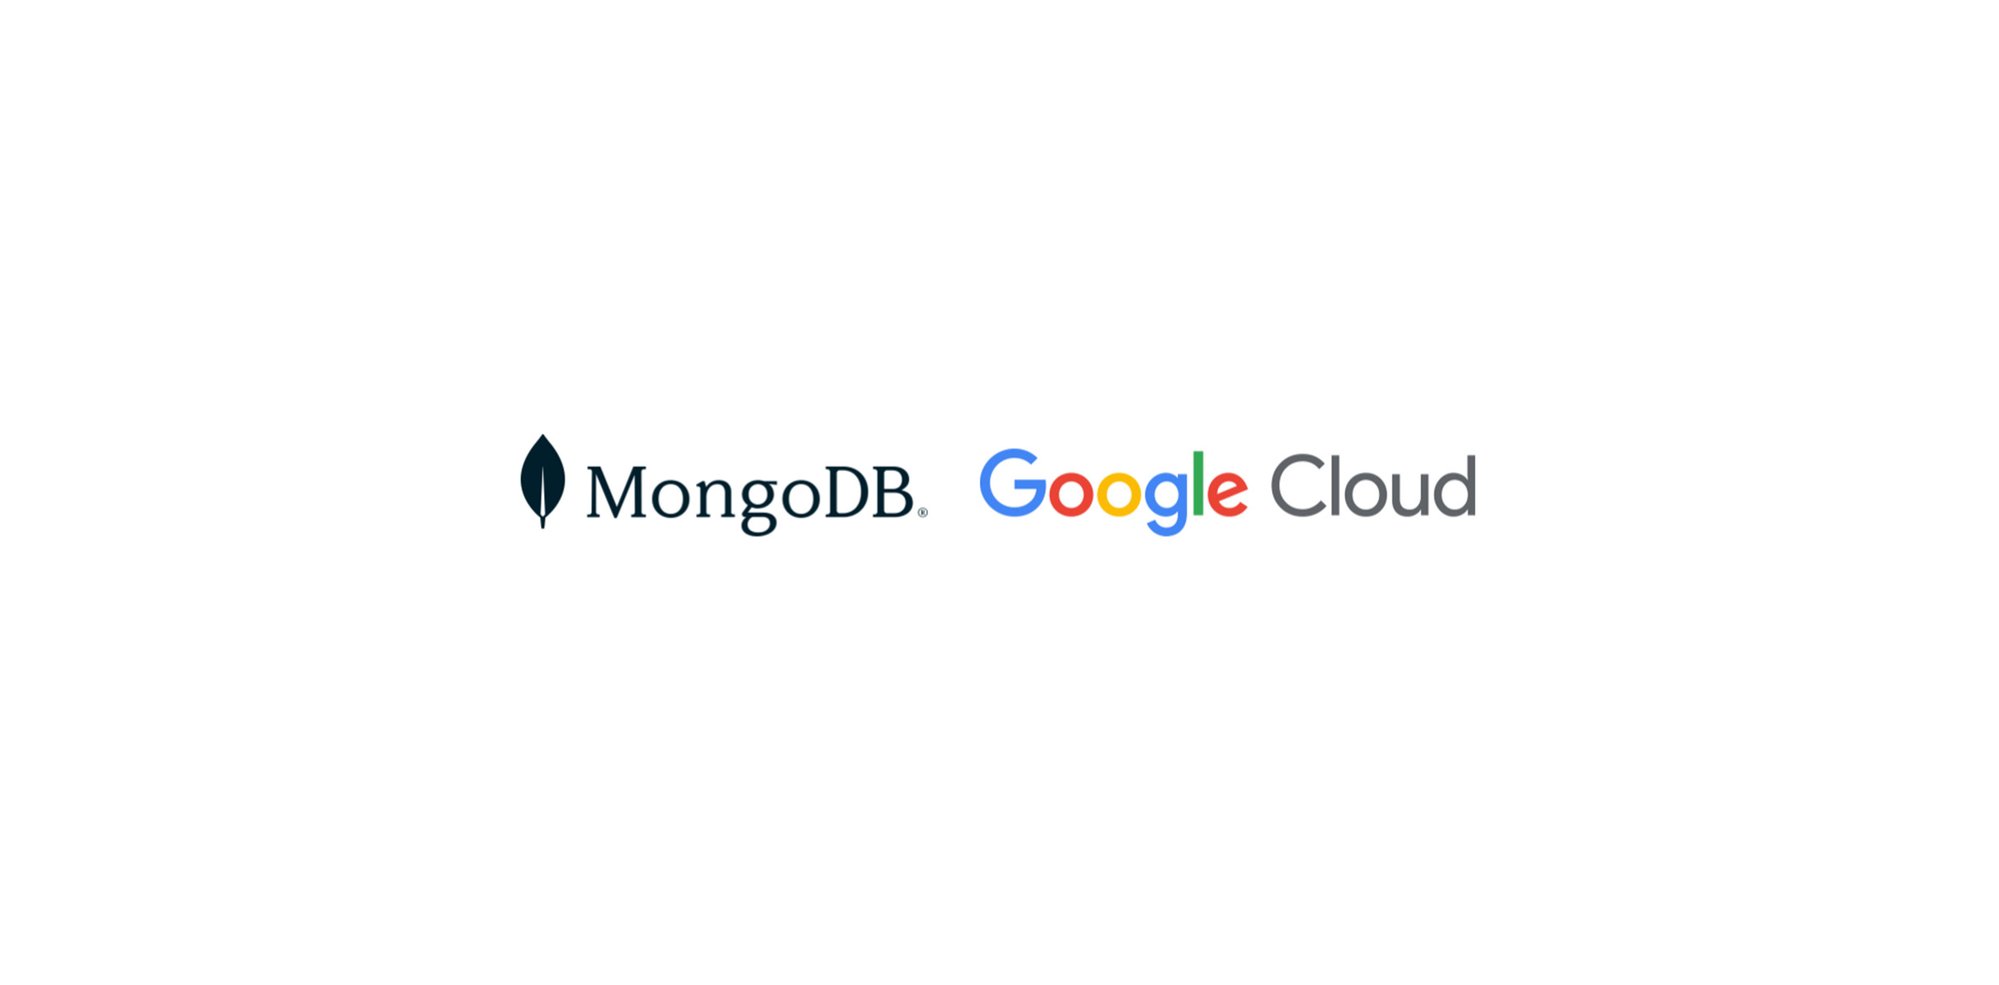 https://storage.googleapis.com/gweb-cloudblog-publish/images/mongoDB.max-2436x985.jpg